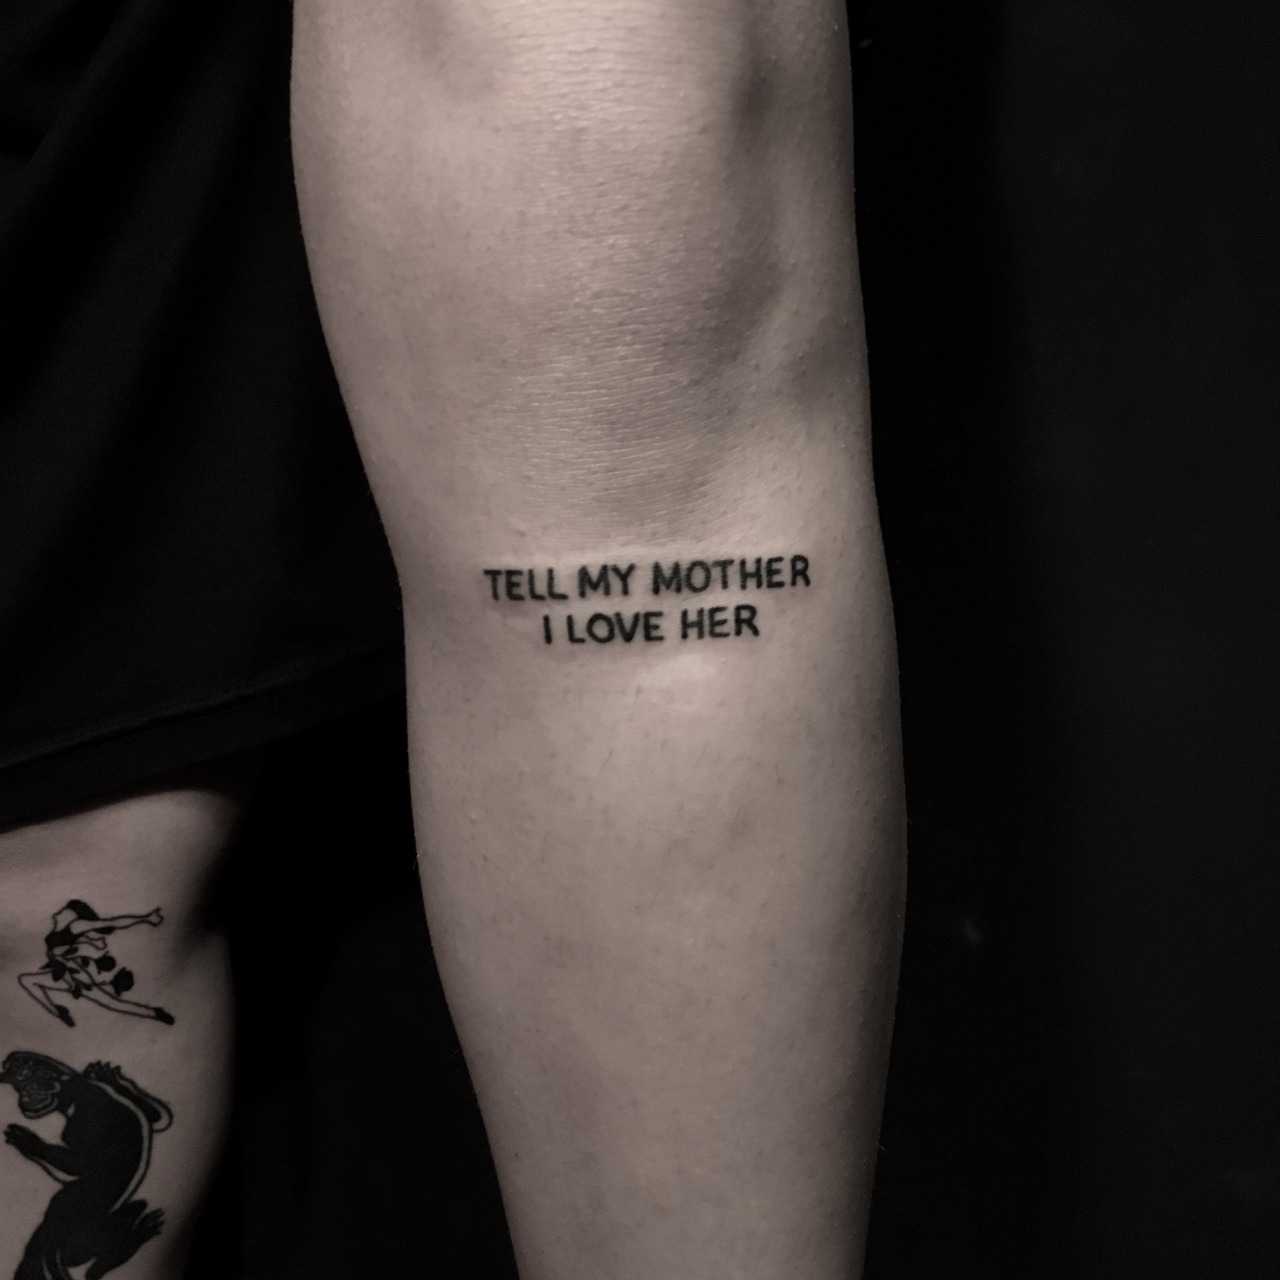 Tell my mother I love her tattoo by Berkin Donmezz